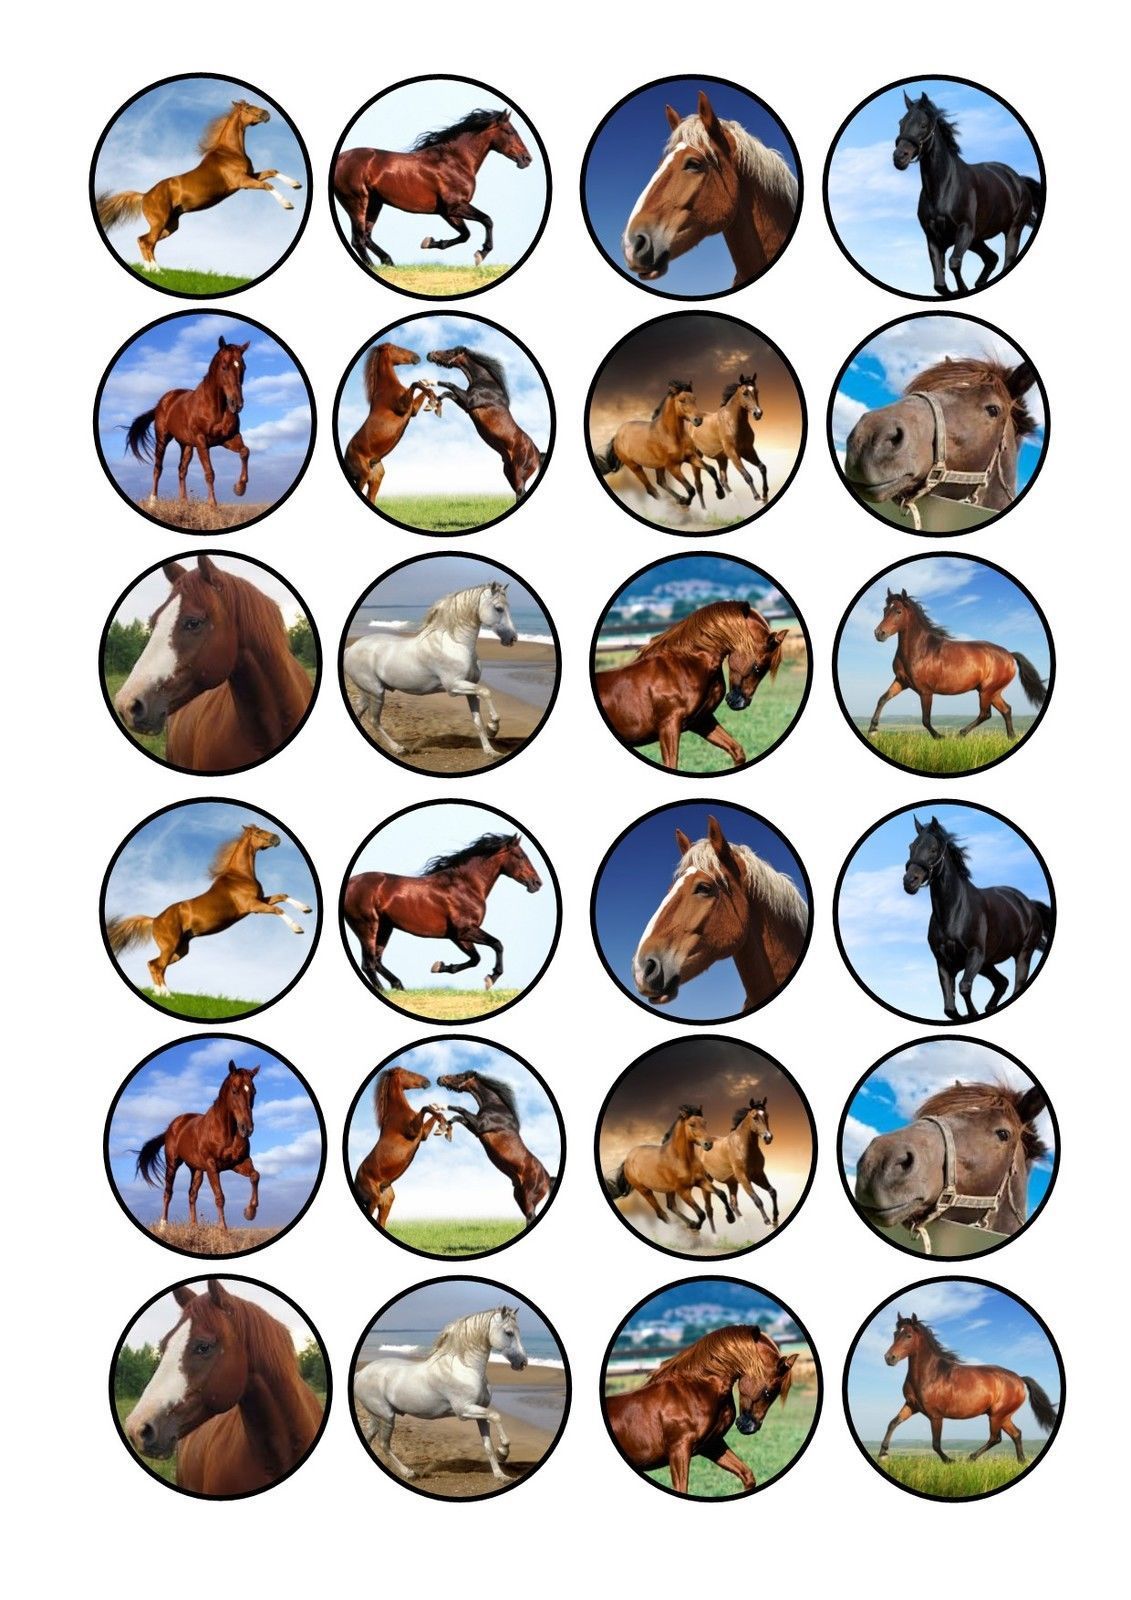 24 Edible cake toppers decorations Horse Horses | eBay -   14 cake Art horse ideas